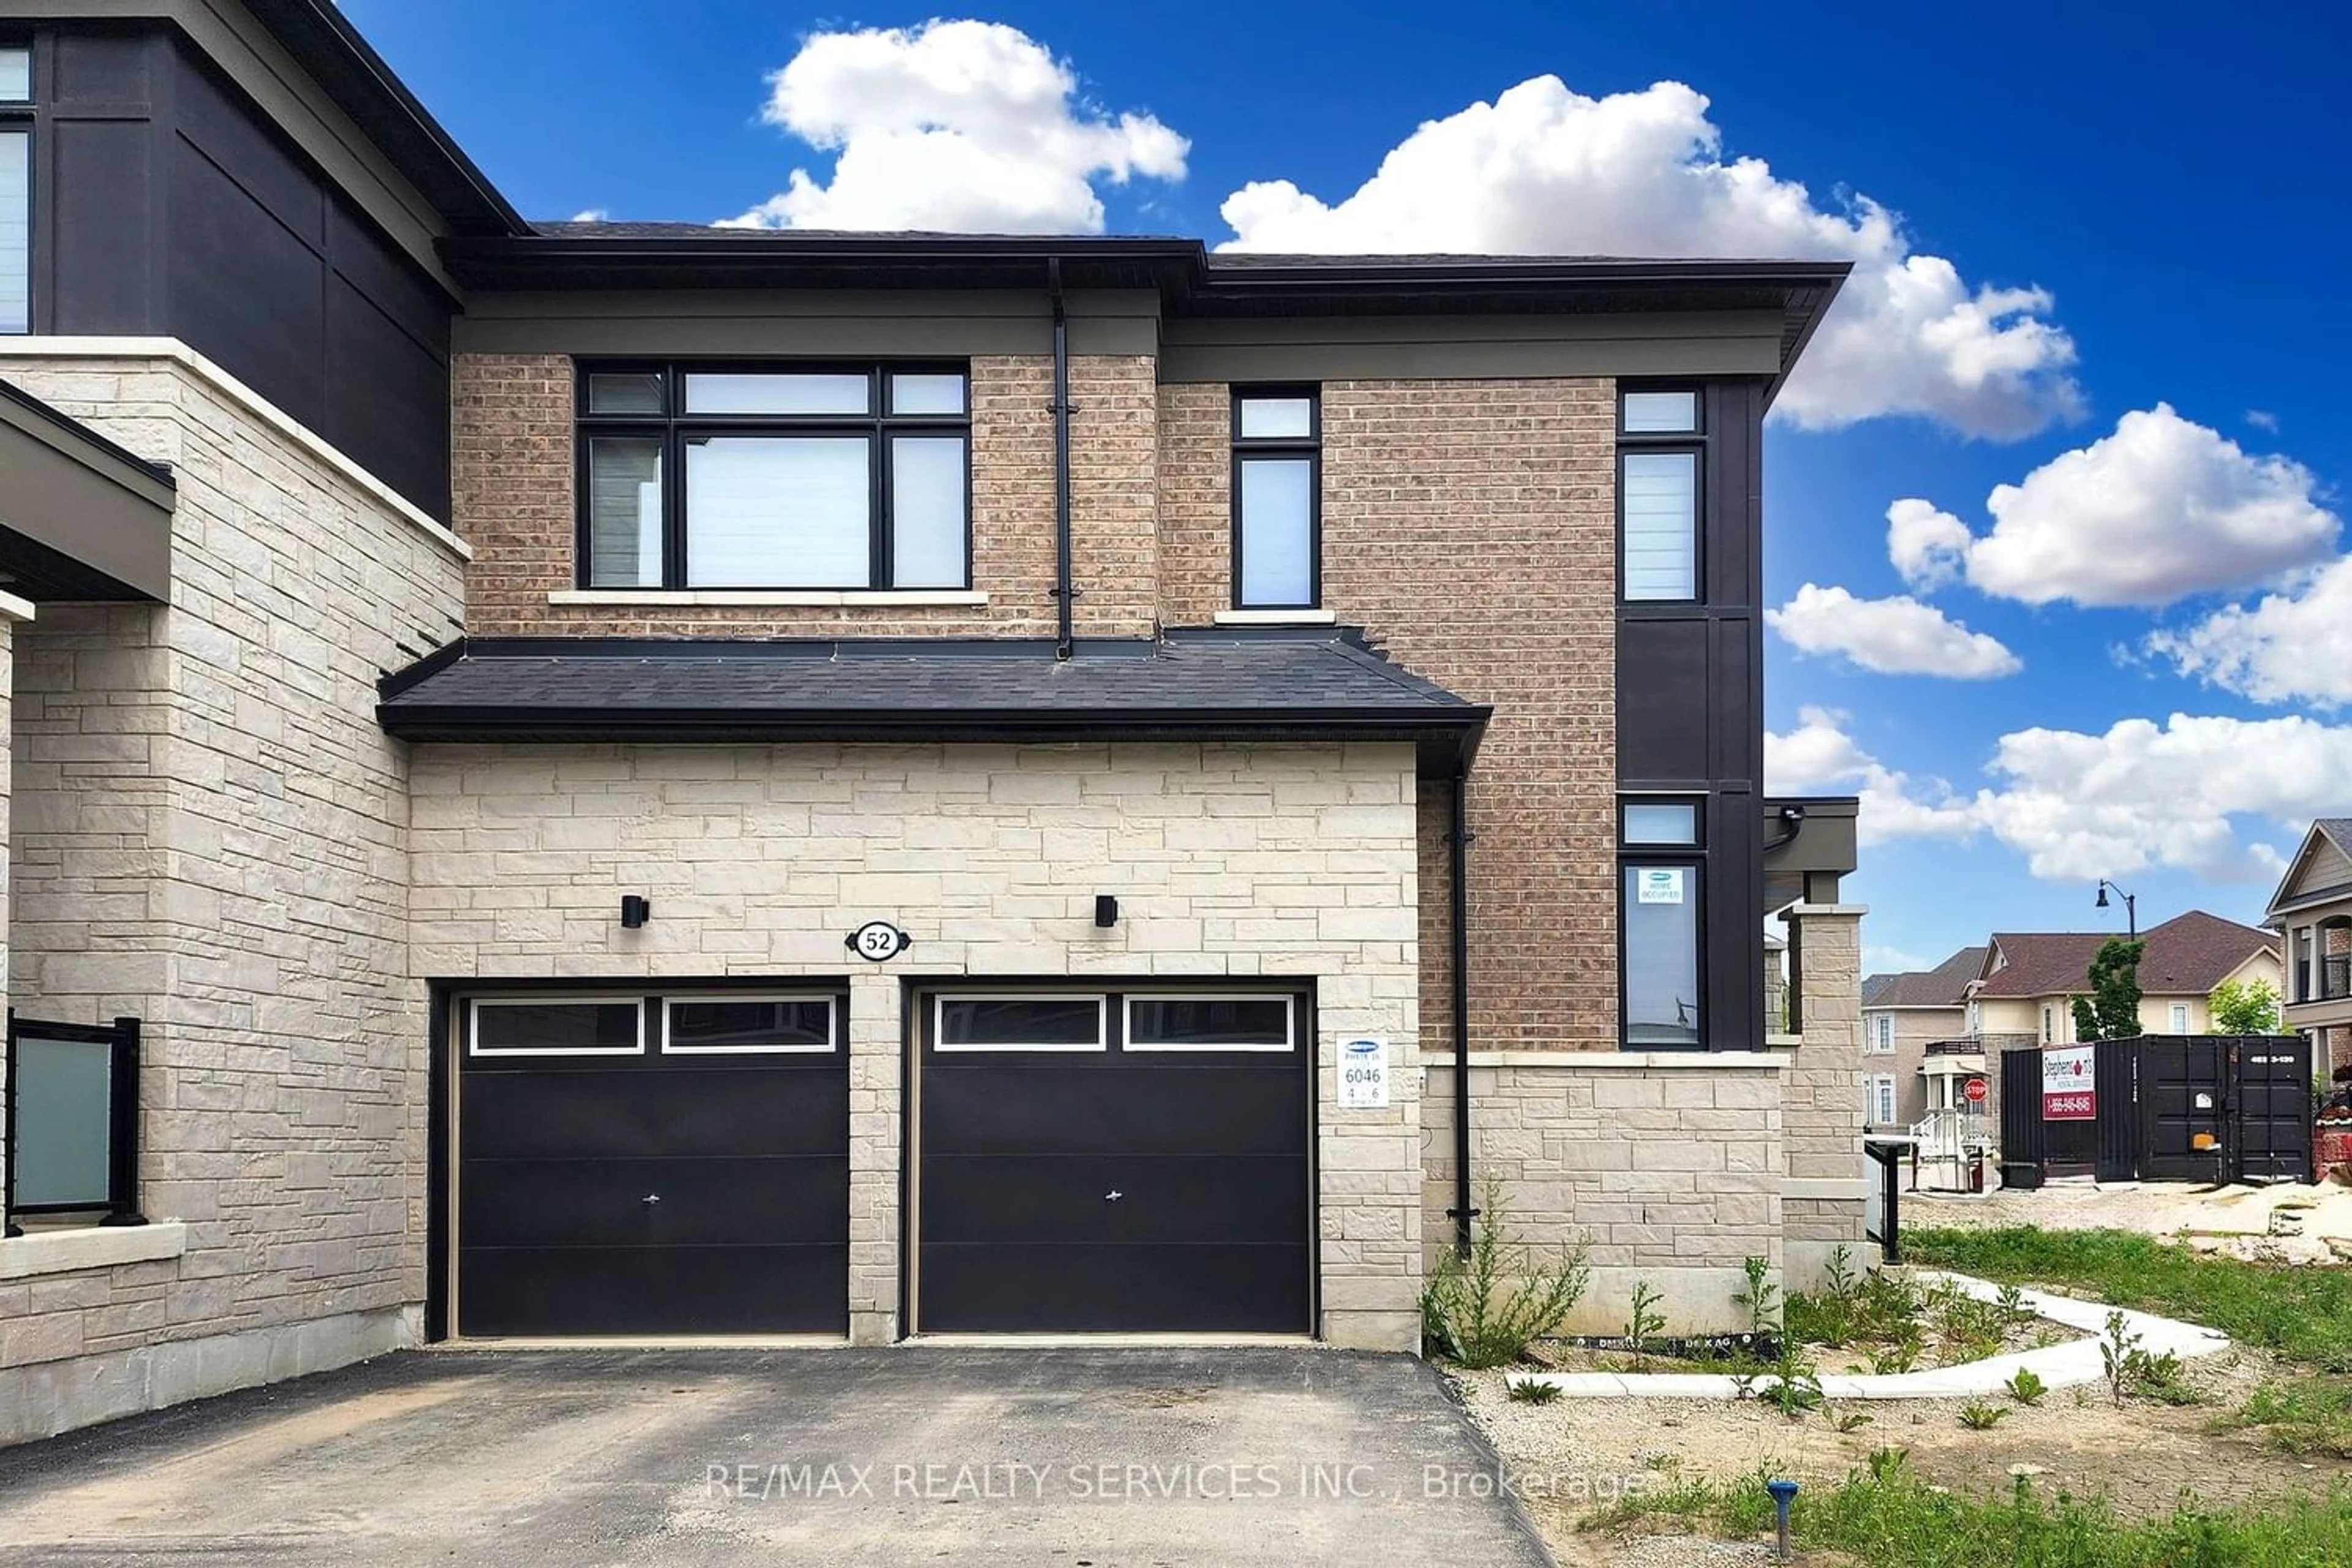 Home with brick exterior material for 52 Keppel Circ, Brampton Ontario L7A 0B6